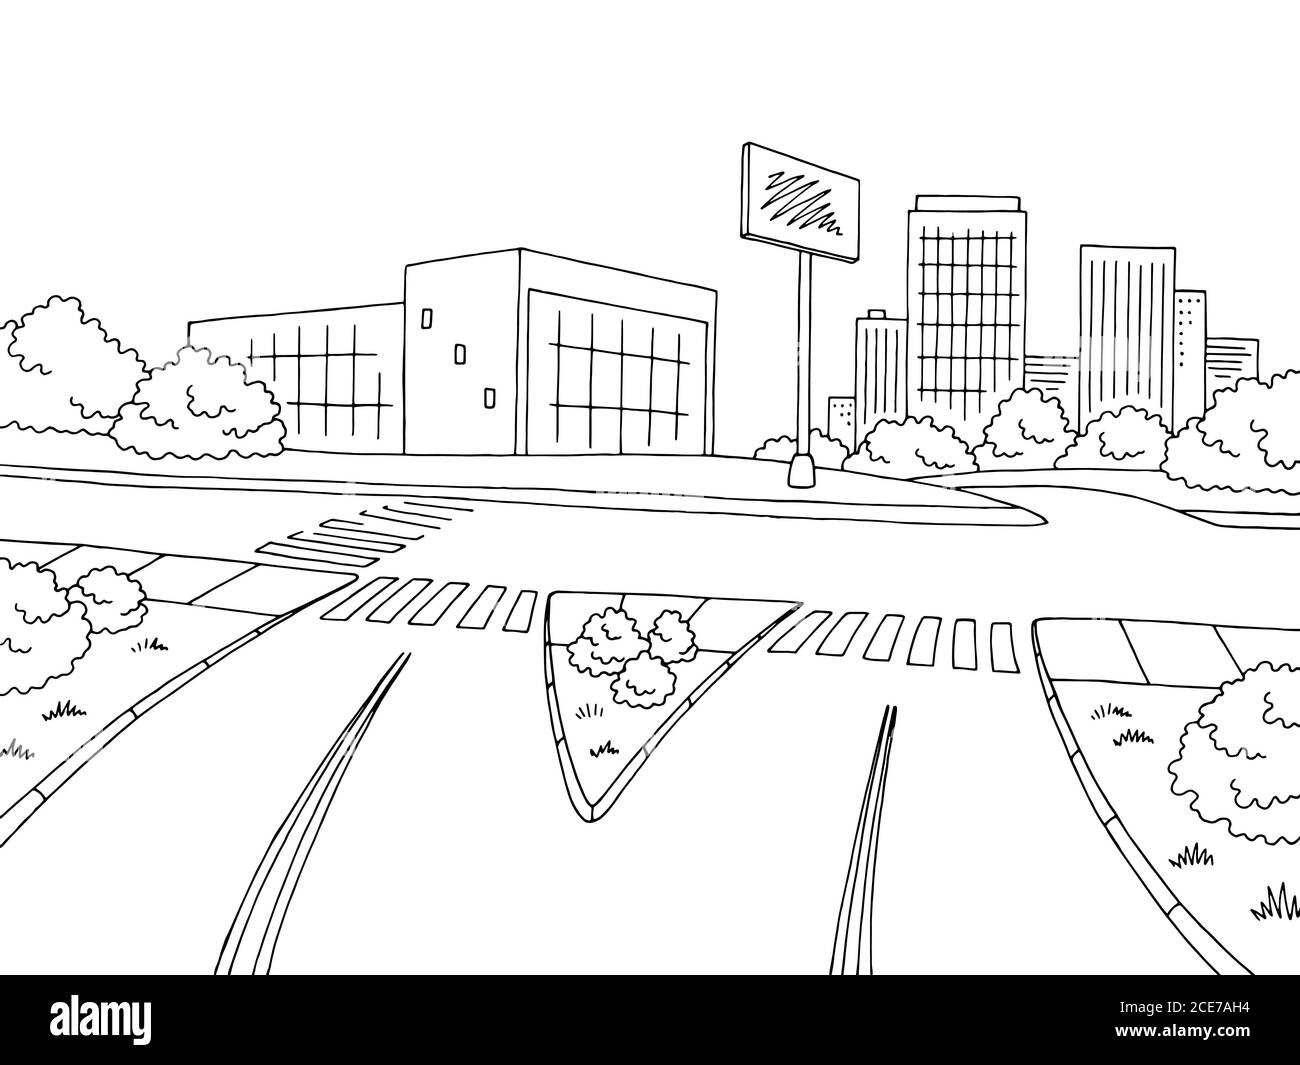 Straße Straße Grafik schwarz weiß Stadt Kreuzung Landschaft Skizze Illustration vektor Stock Vektor